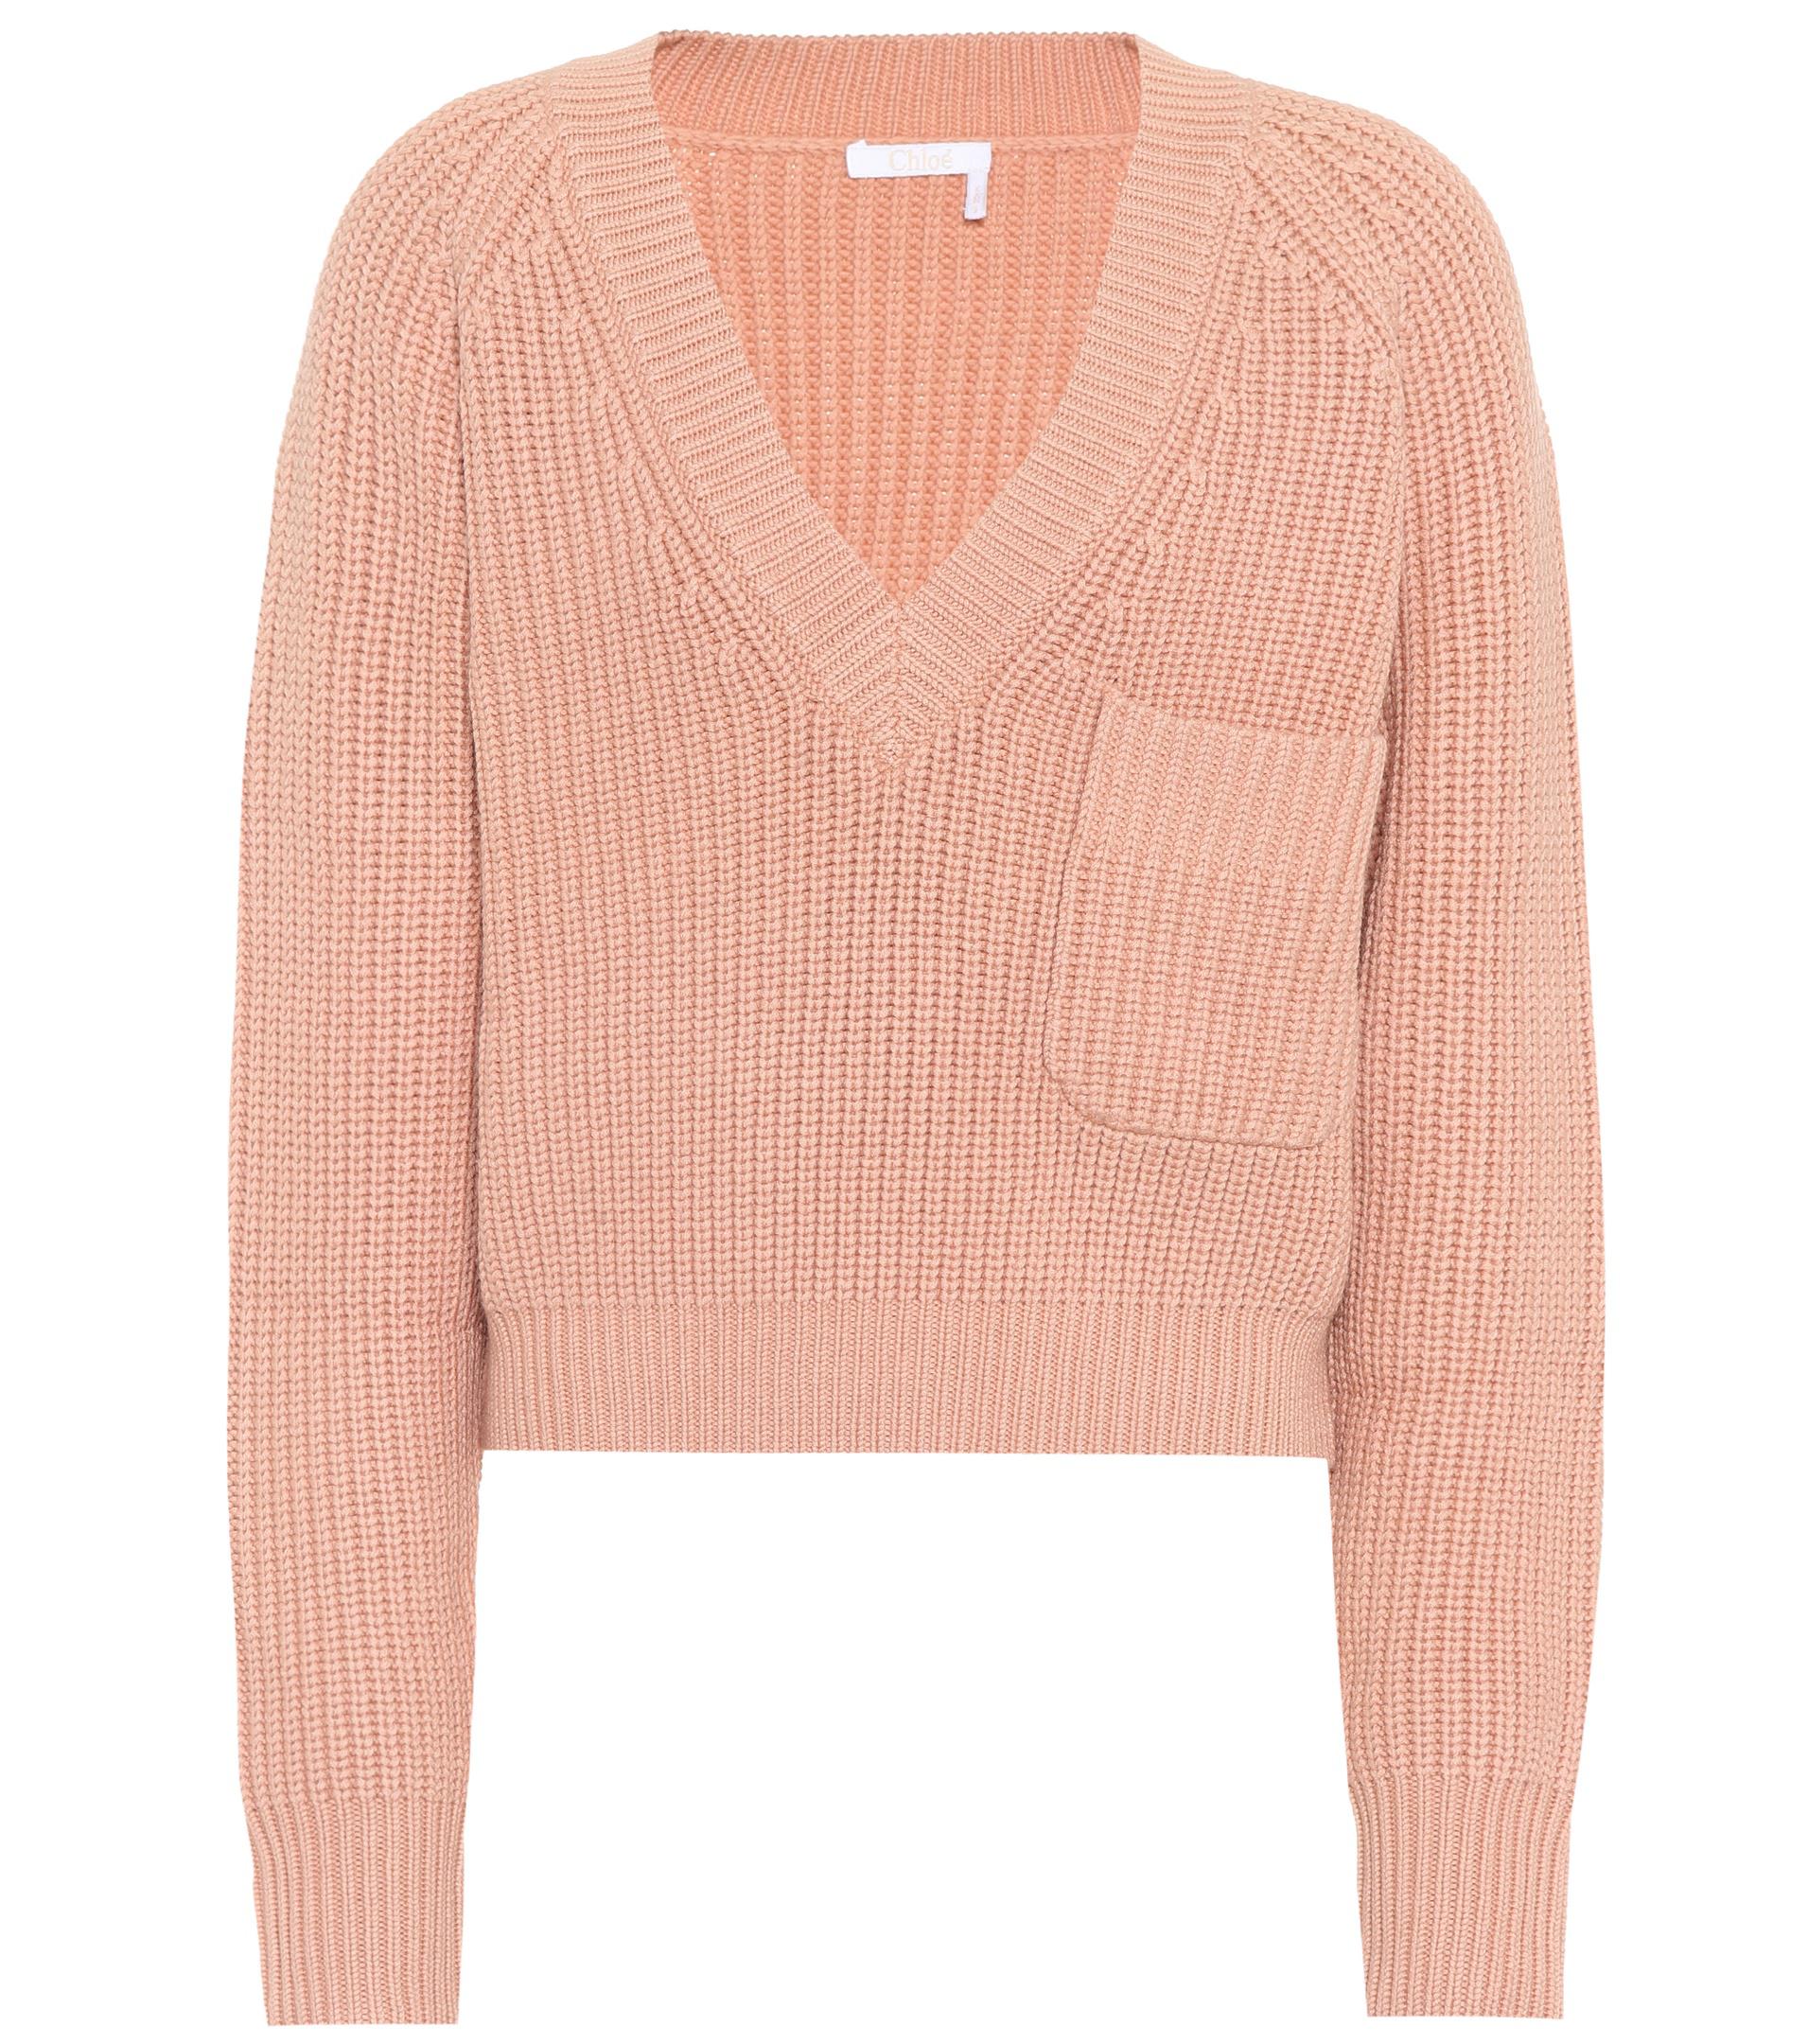 Chloé Wool Sweater in Pink - Lyst